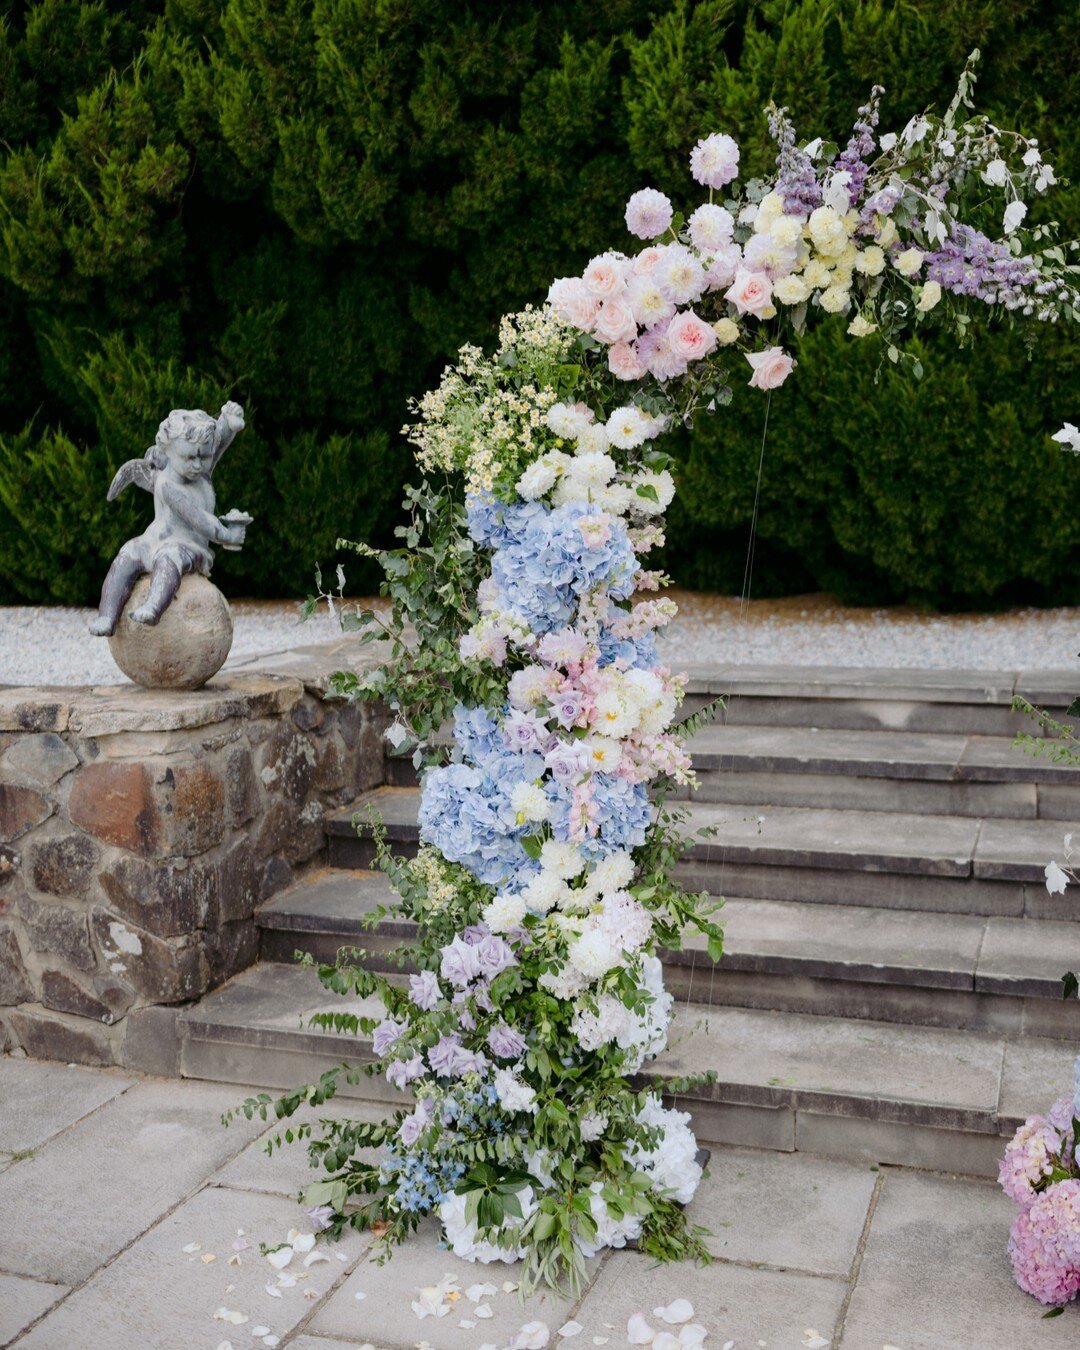 Florals fit for angels 👼🏼​​​​​​​​​
FLORALS: @ivylanecollective
VENUE: @monafarm_
PHOTOGRAPHER: @mitchpohl
HAIR/MUA: @airlieandco

#monafarm #monafarmwedding #braidwood #braidwoodwedding #weddingceremony #asymmetricalarch #ivylanecollective #wedding